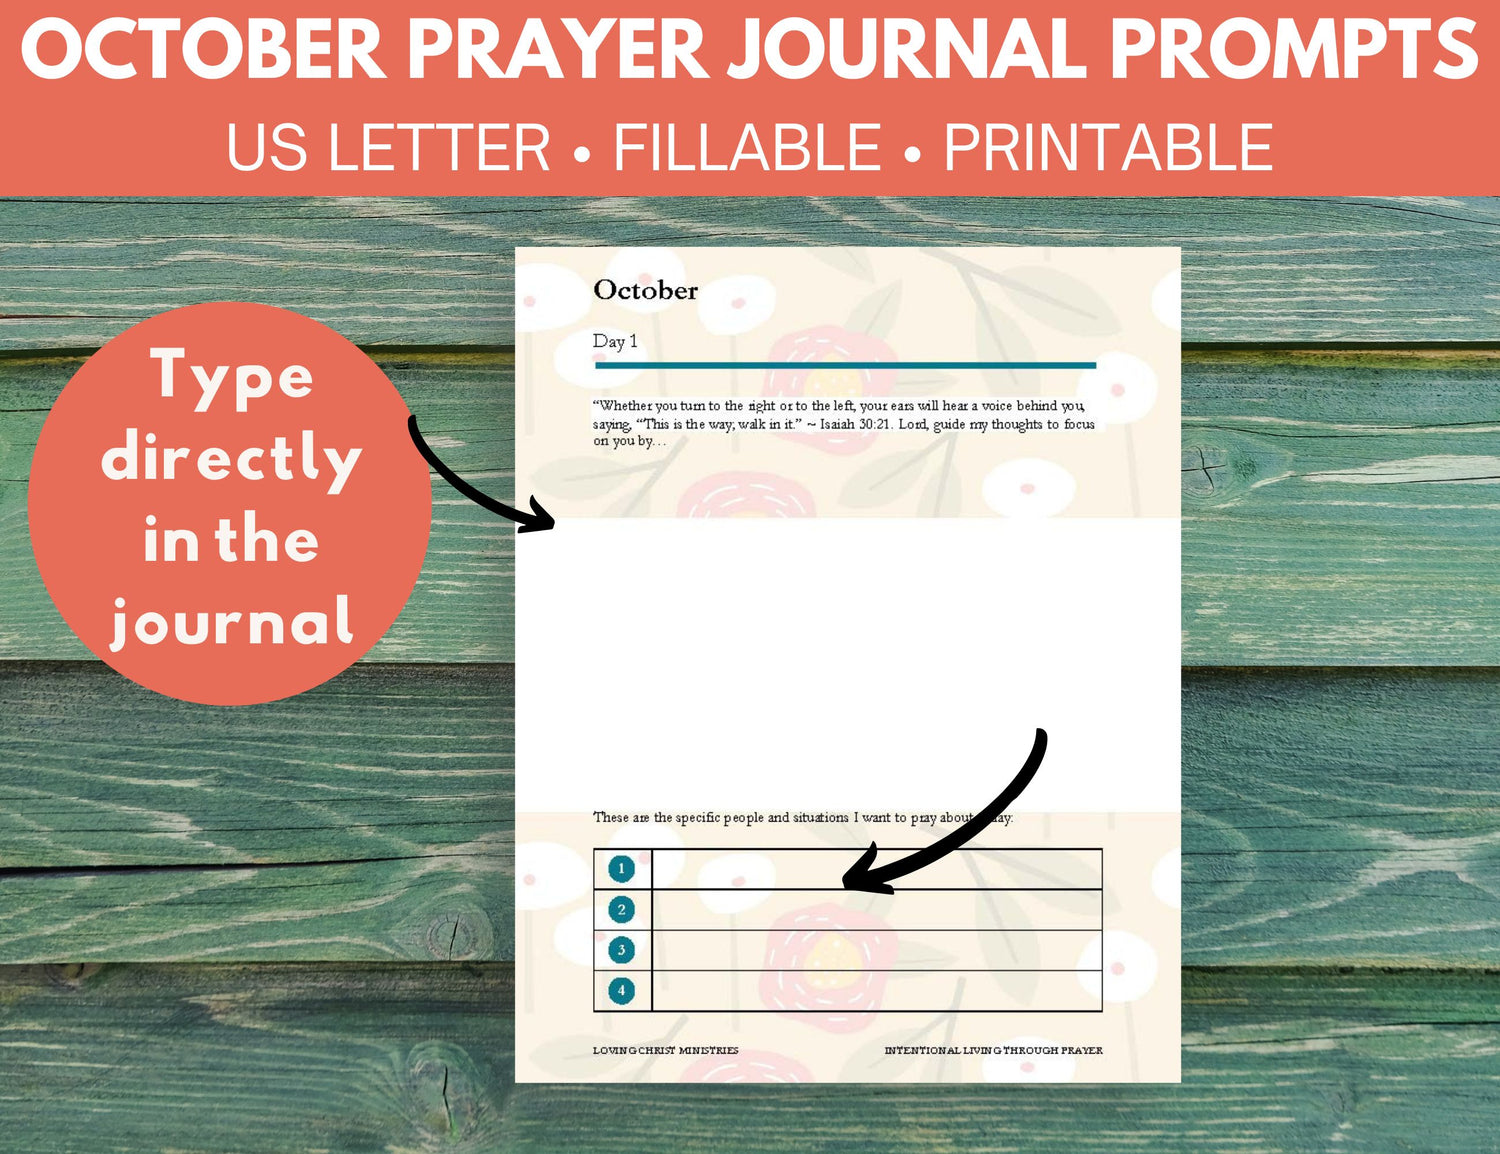 October Prayer Journal Prompts (Fillable)